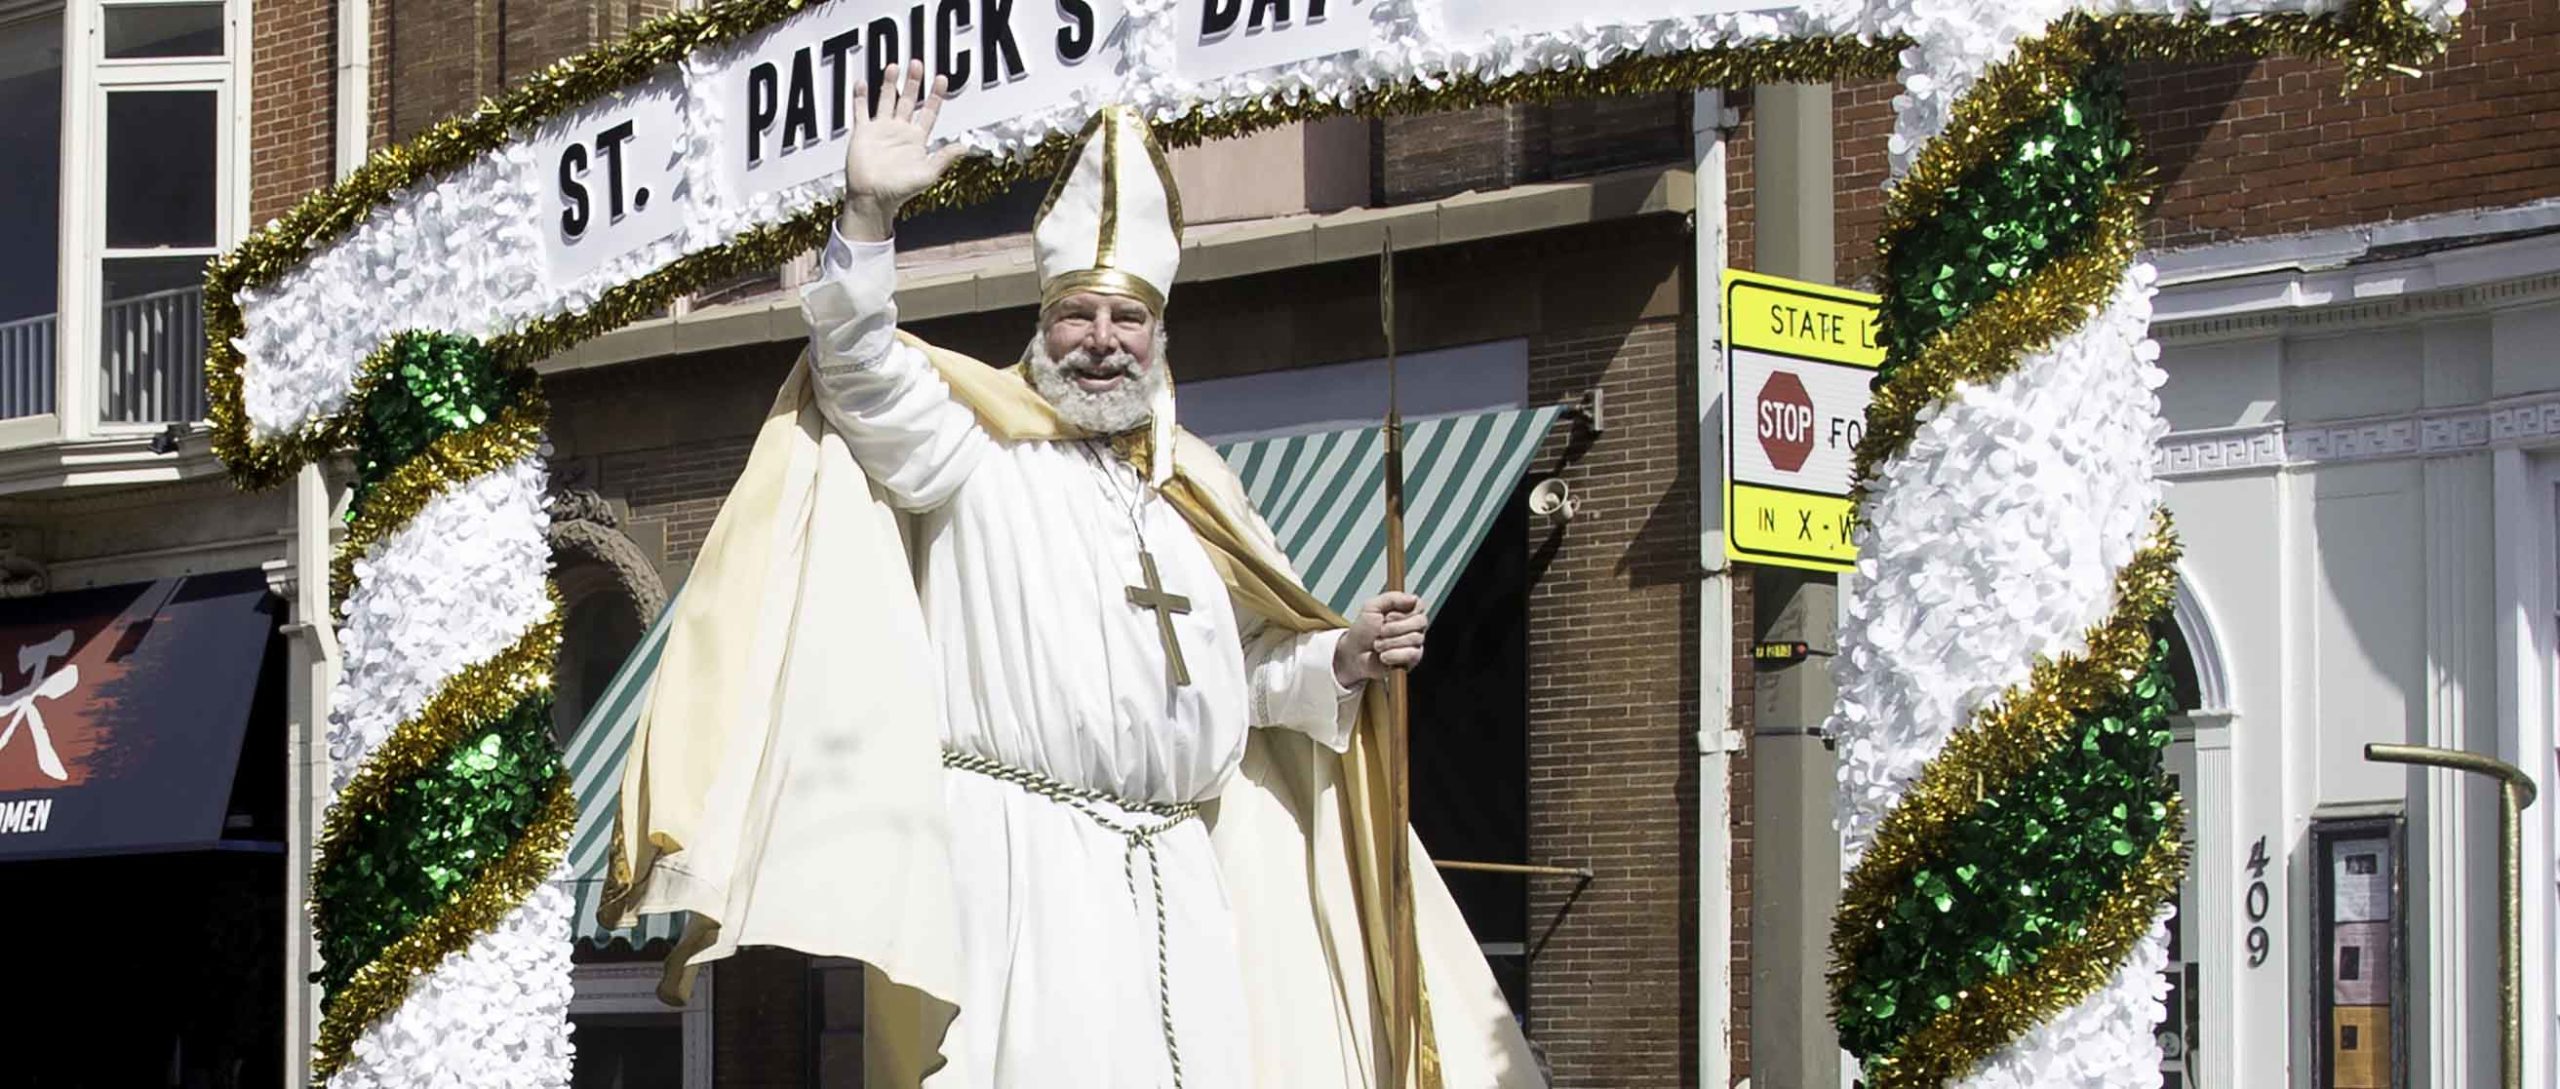 Parade People: Catholics stoke Baltimore’s St. Patrick tradition